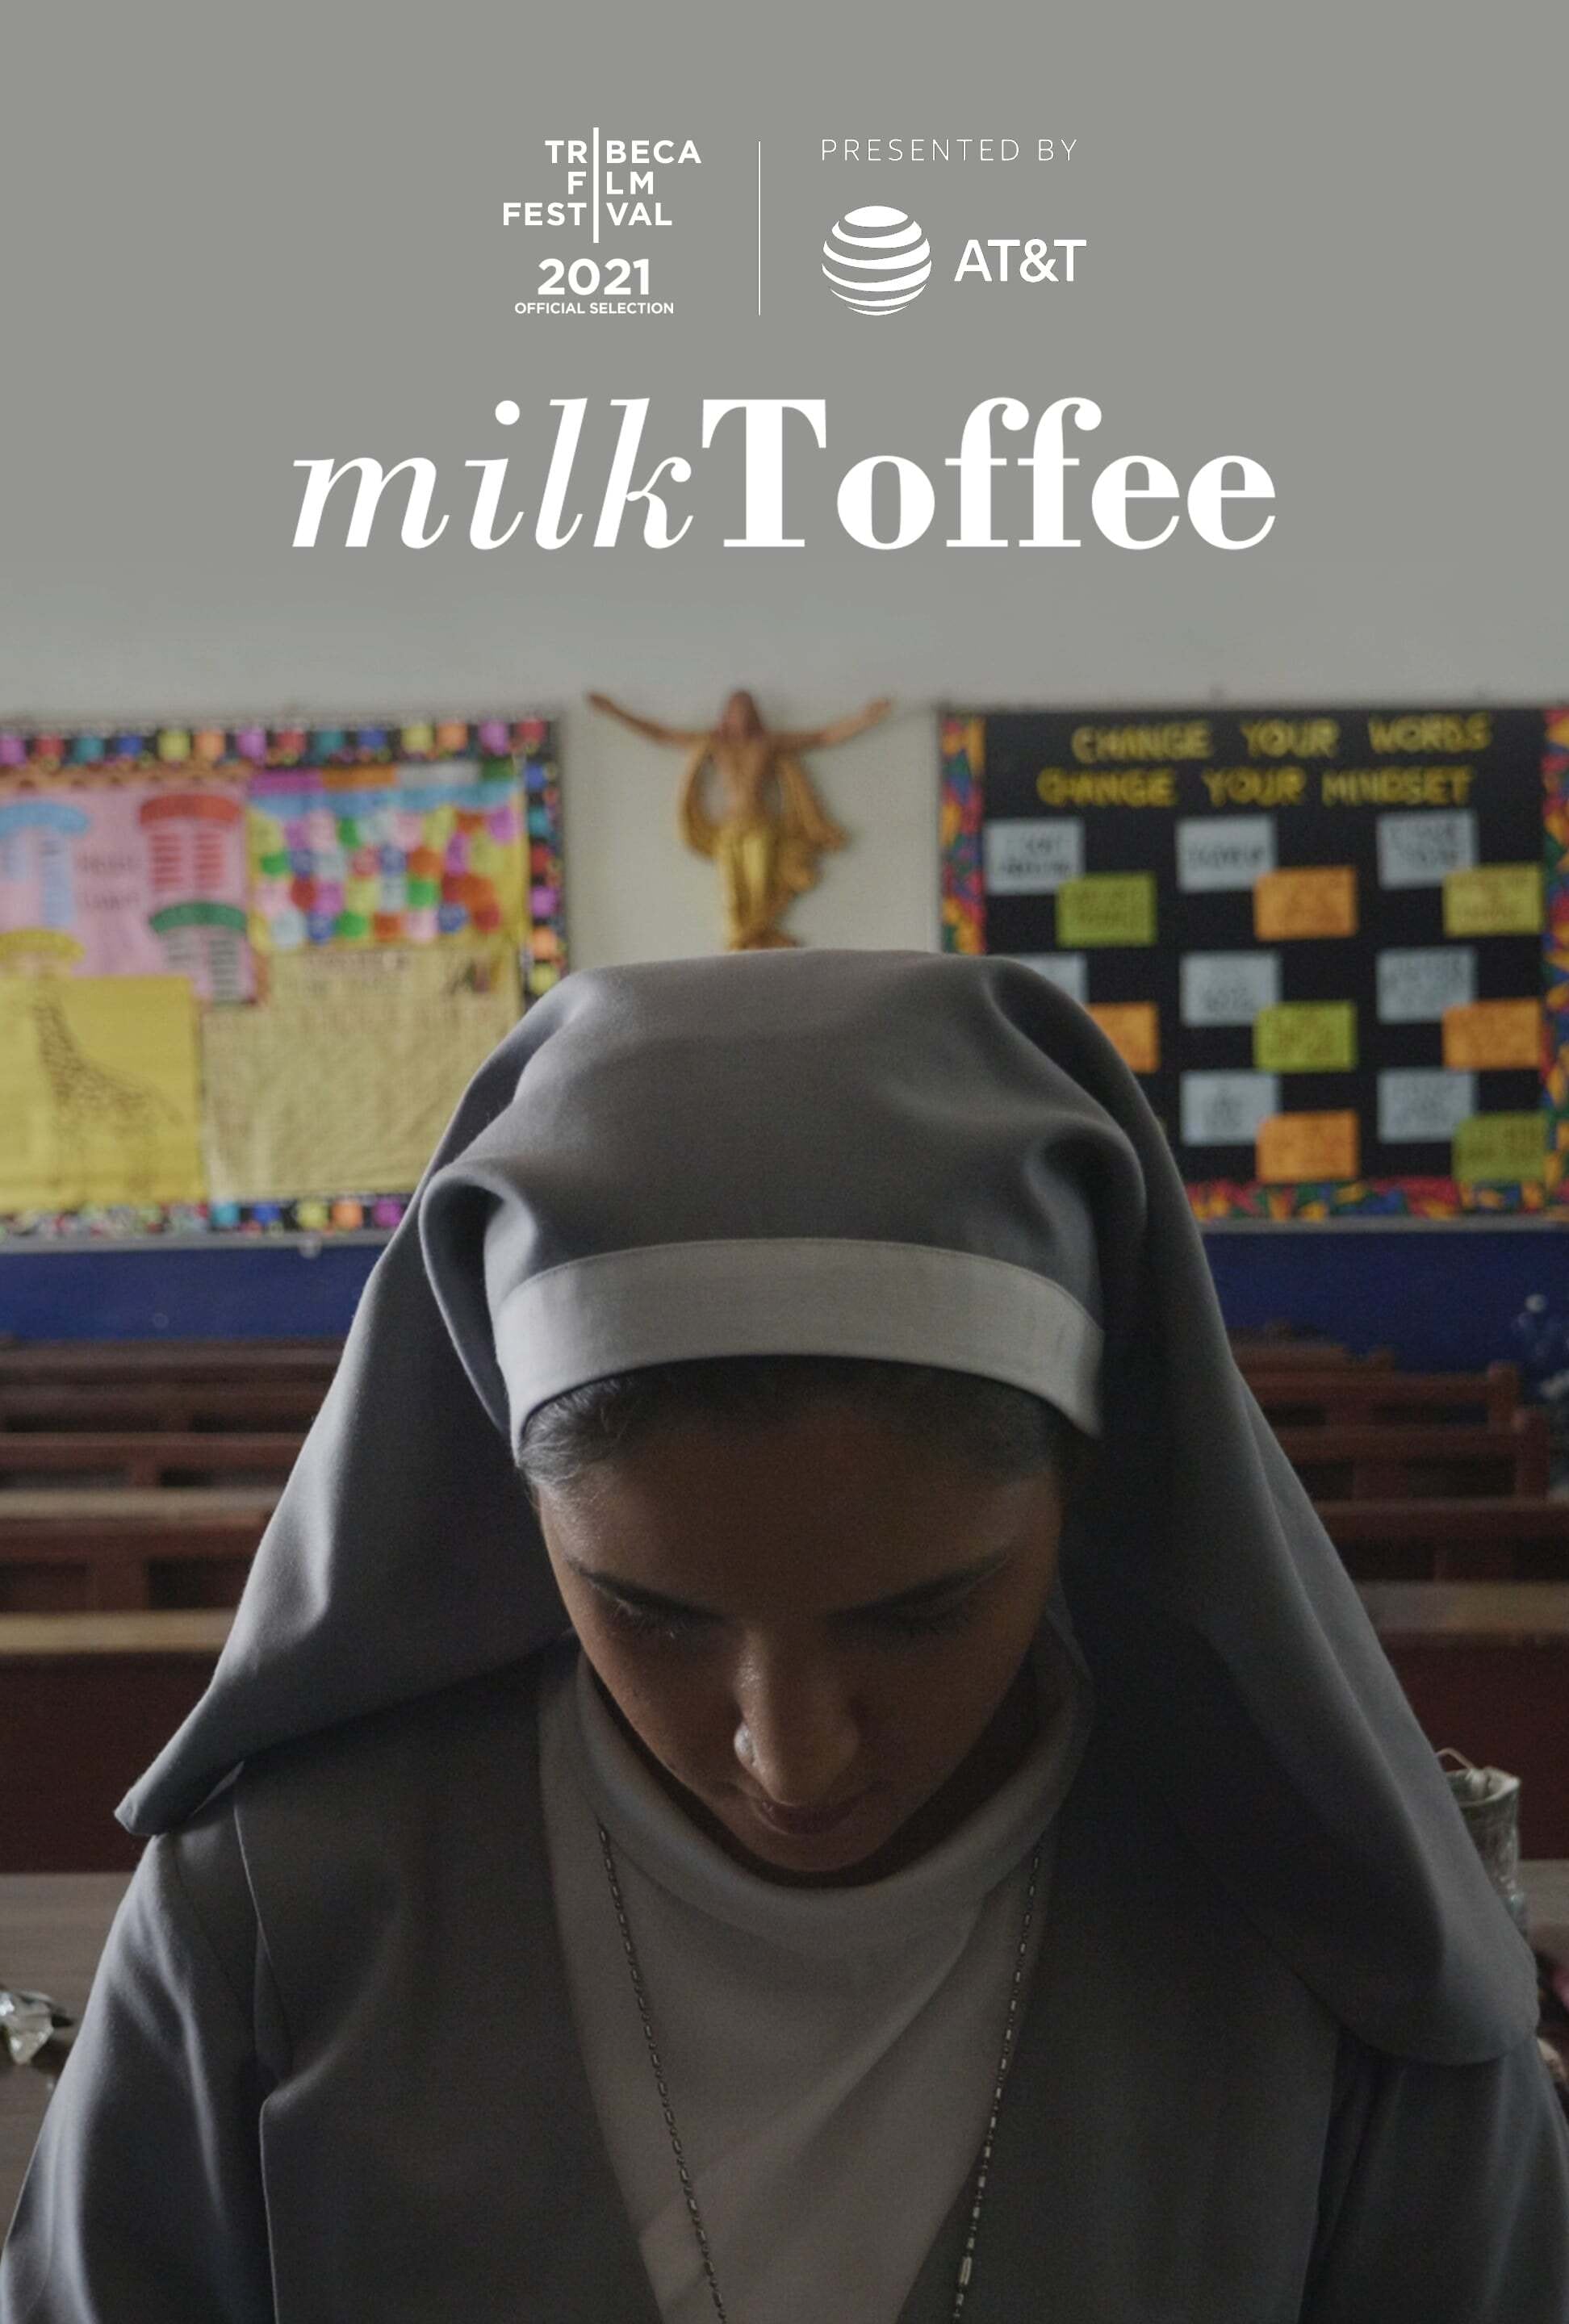 Milk Toffee